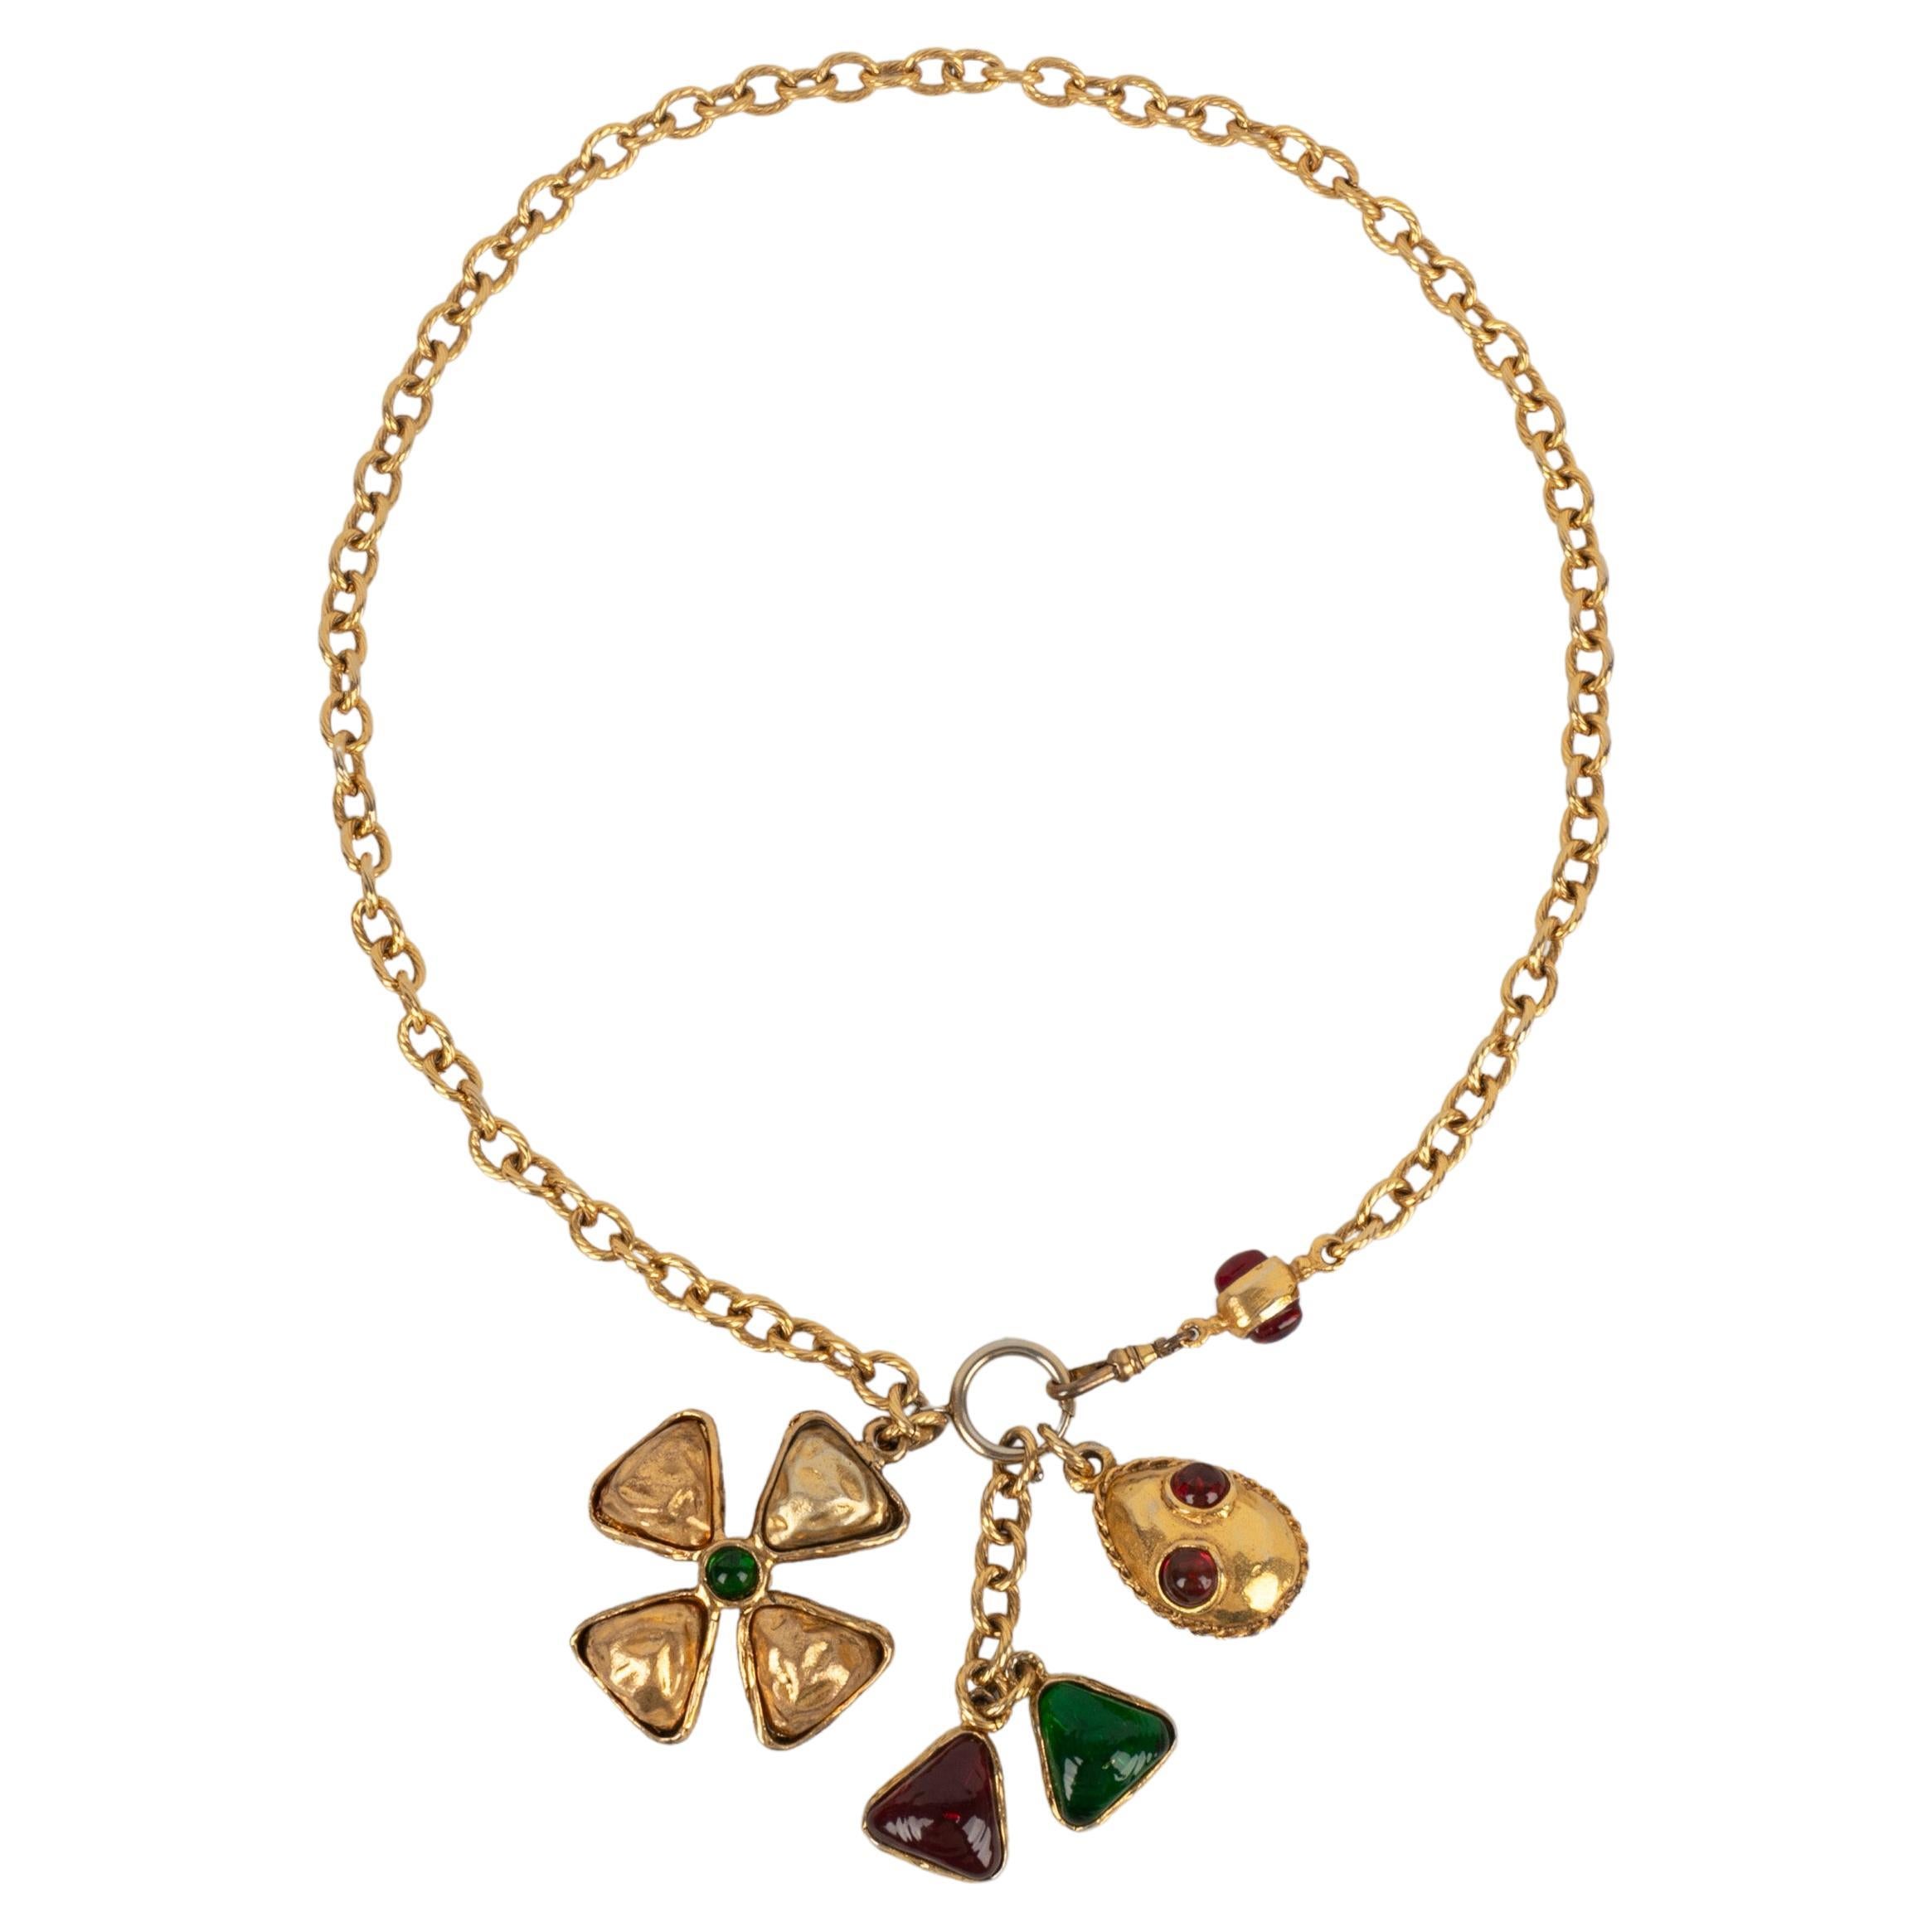 Chanel Byzantine necklace